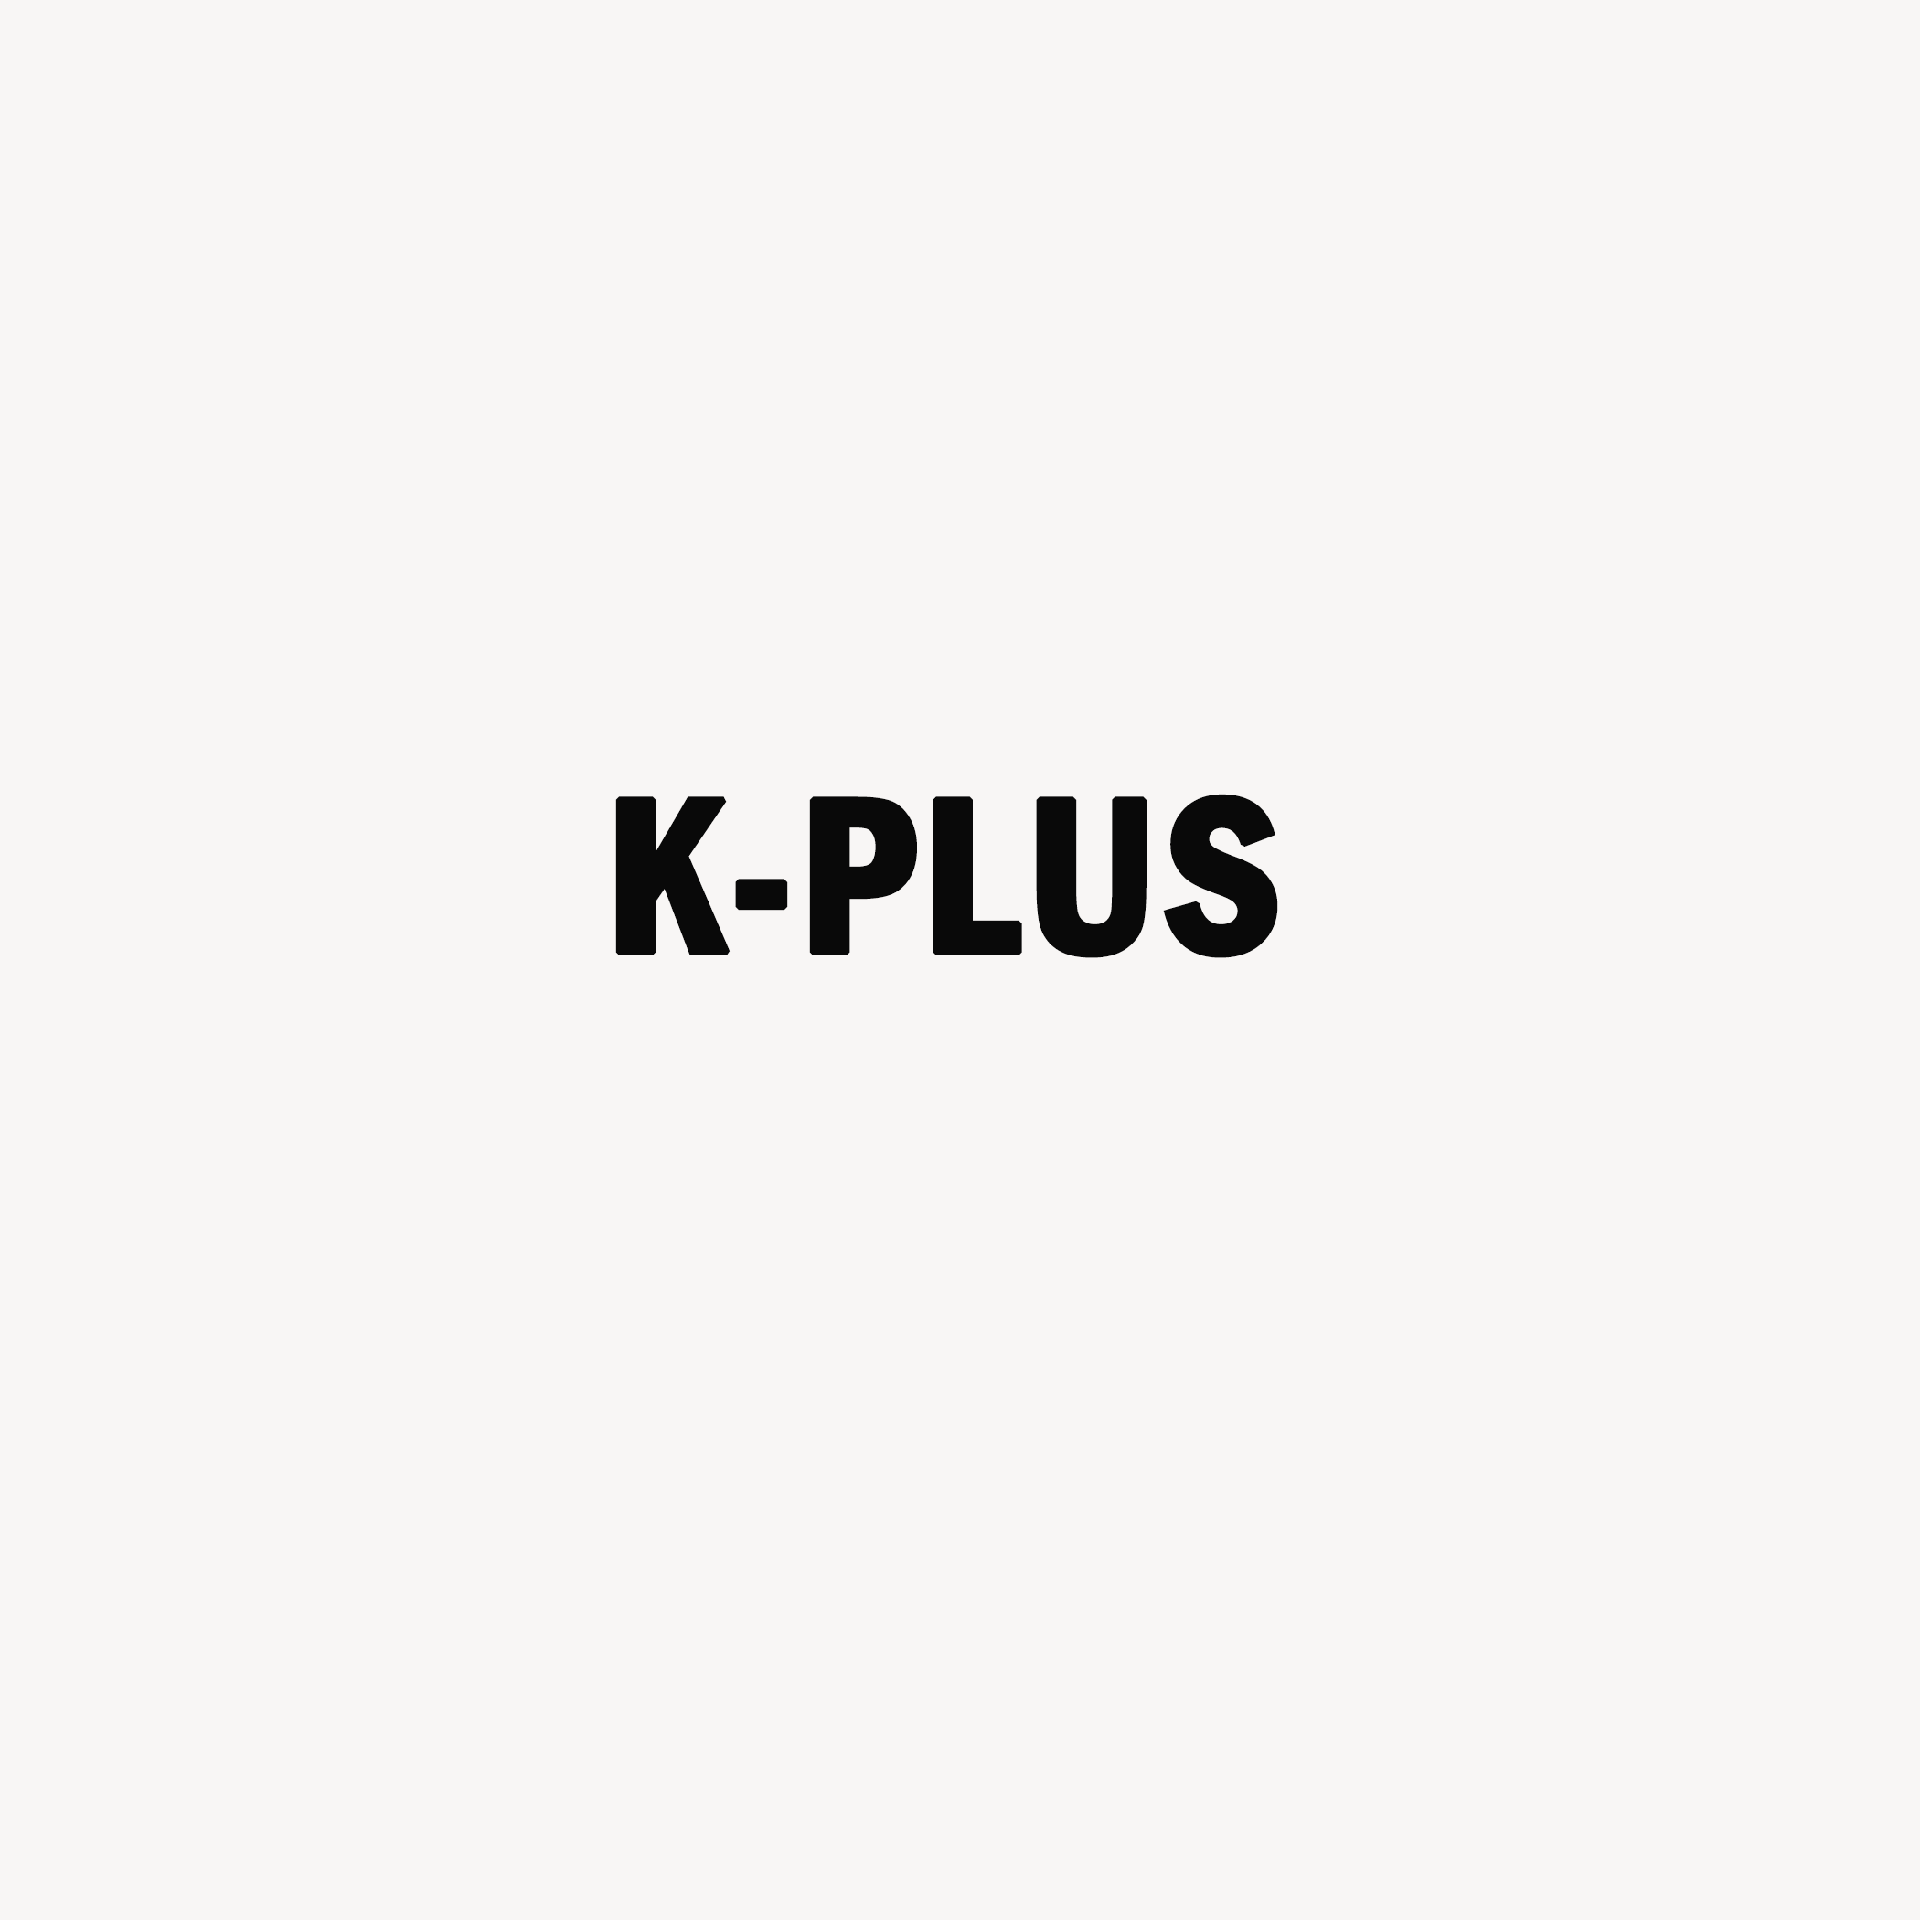 Product Brand: K-Plus